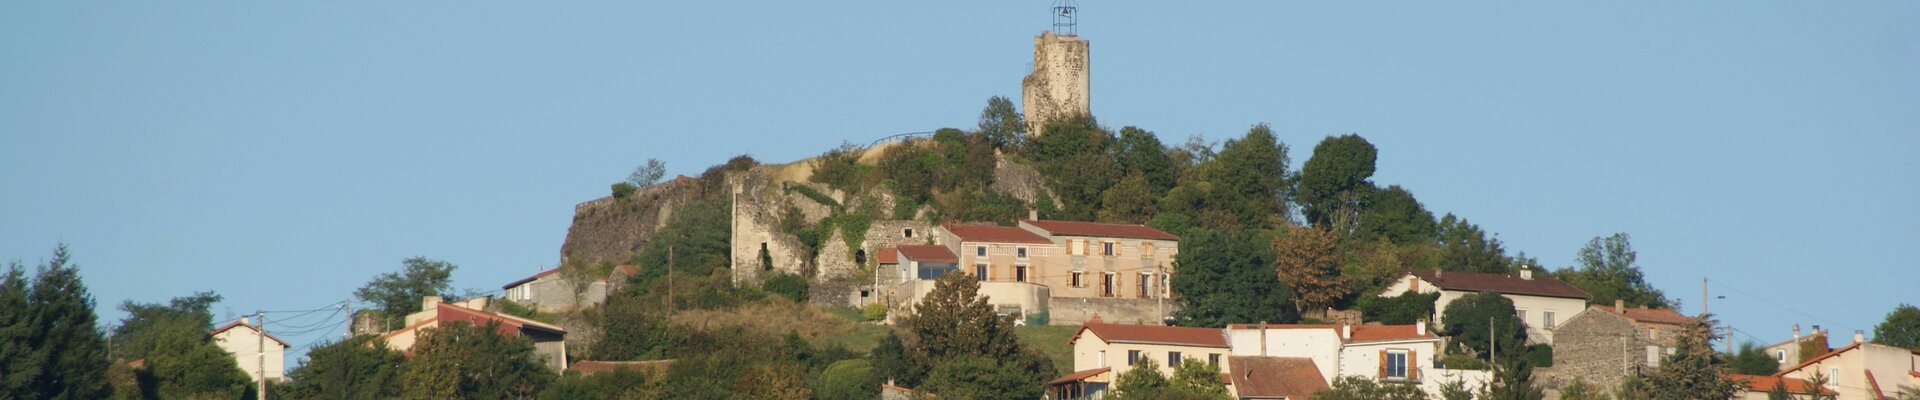 Origine Histoire Village Le Crest Auvergne